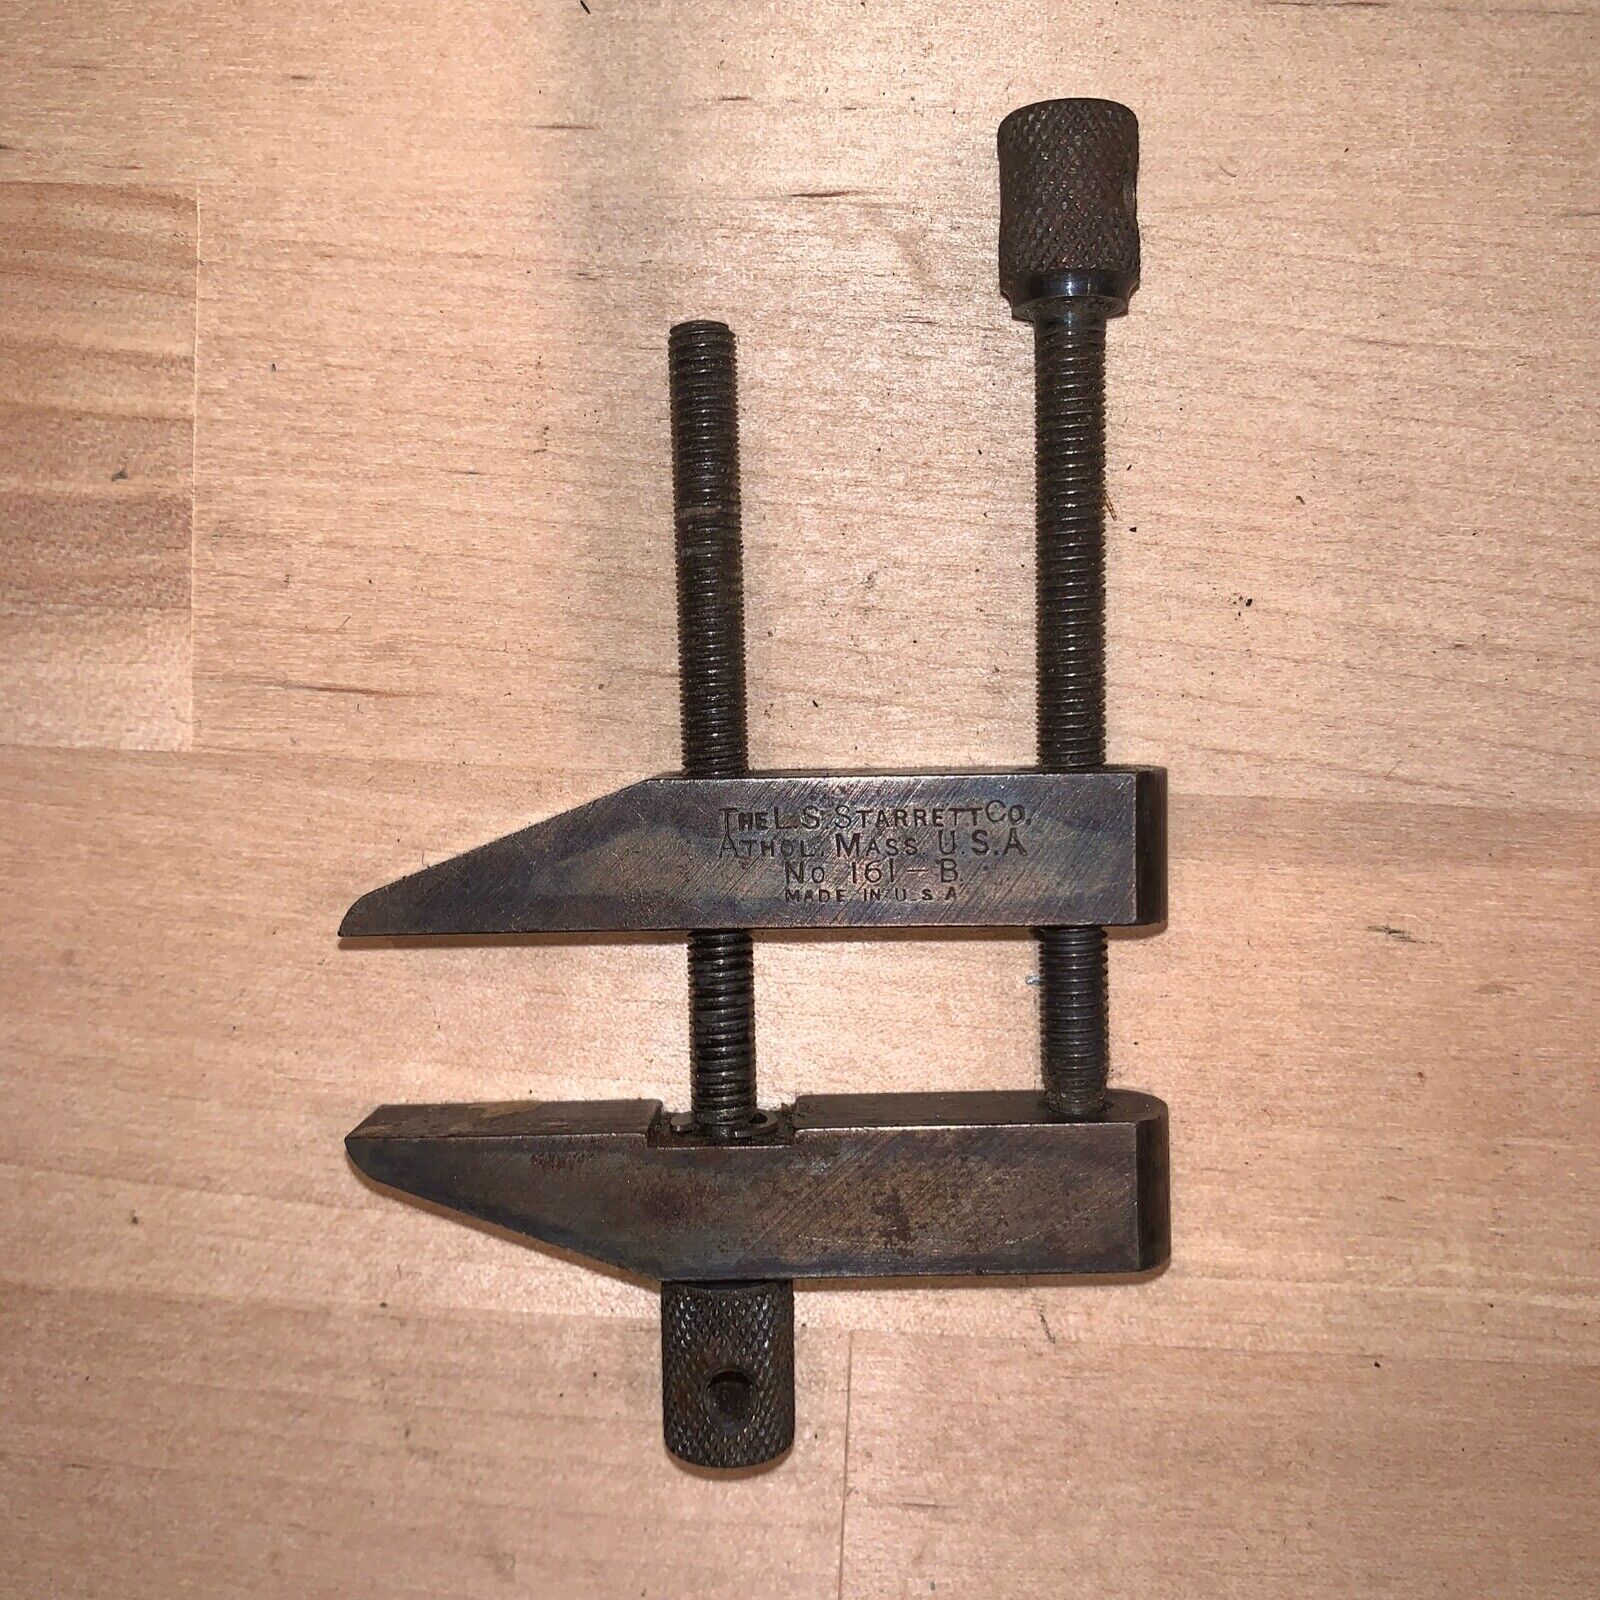 Vintage LS Starrett No. 161-B Machinist Parallel Clamp